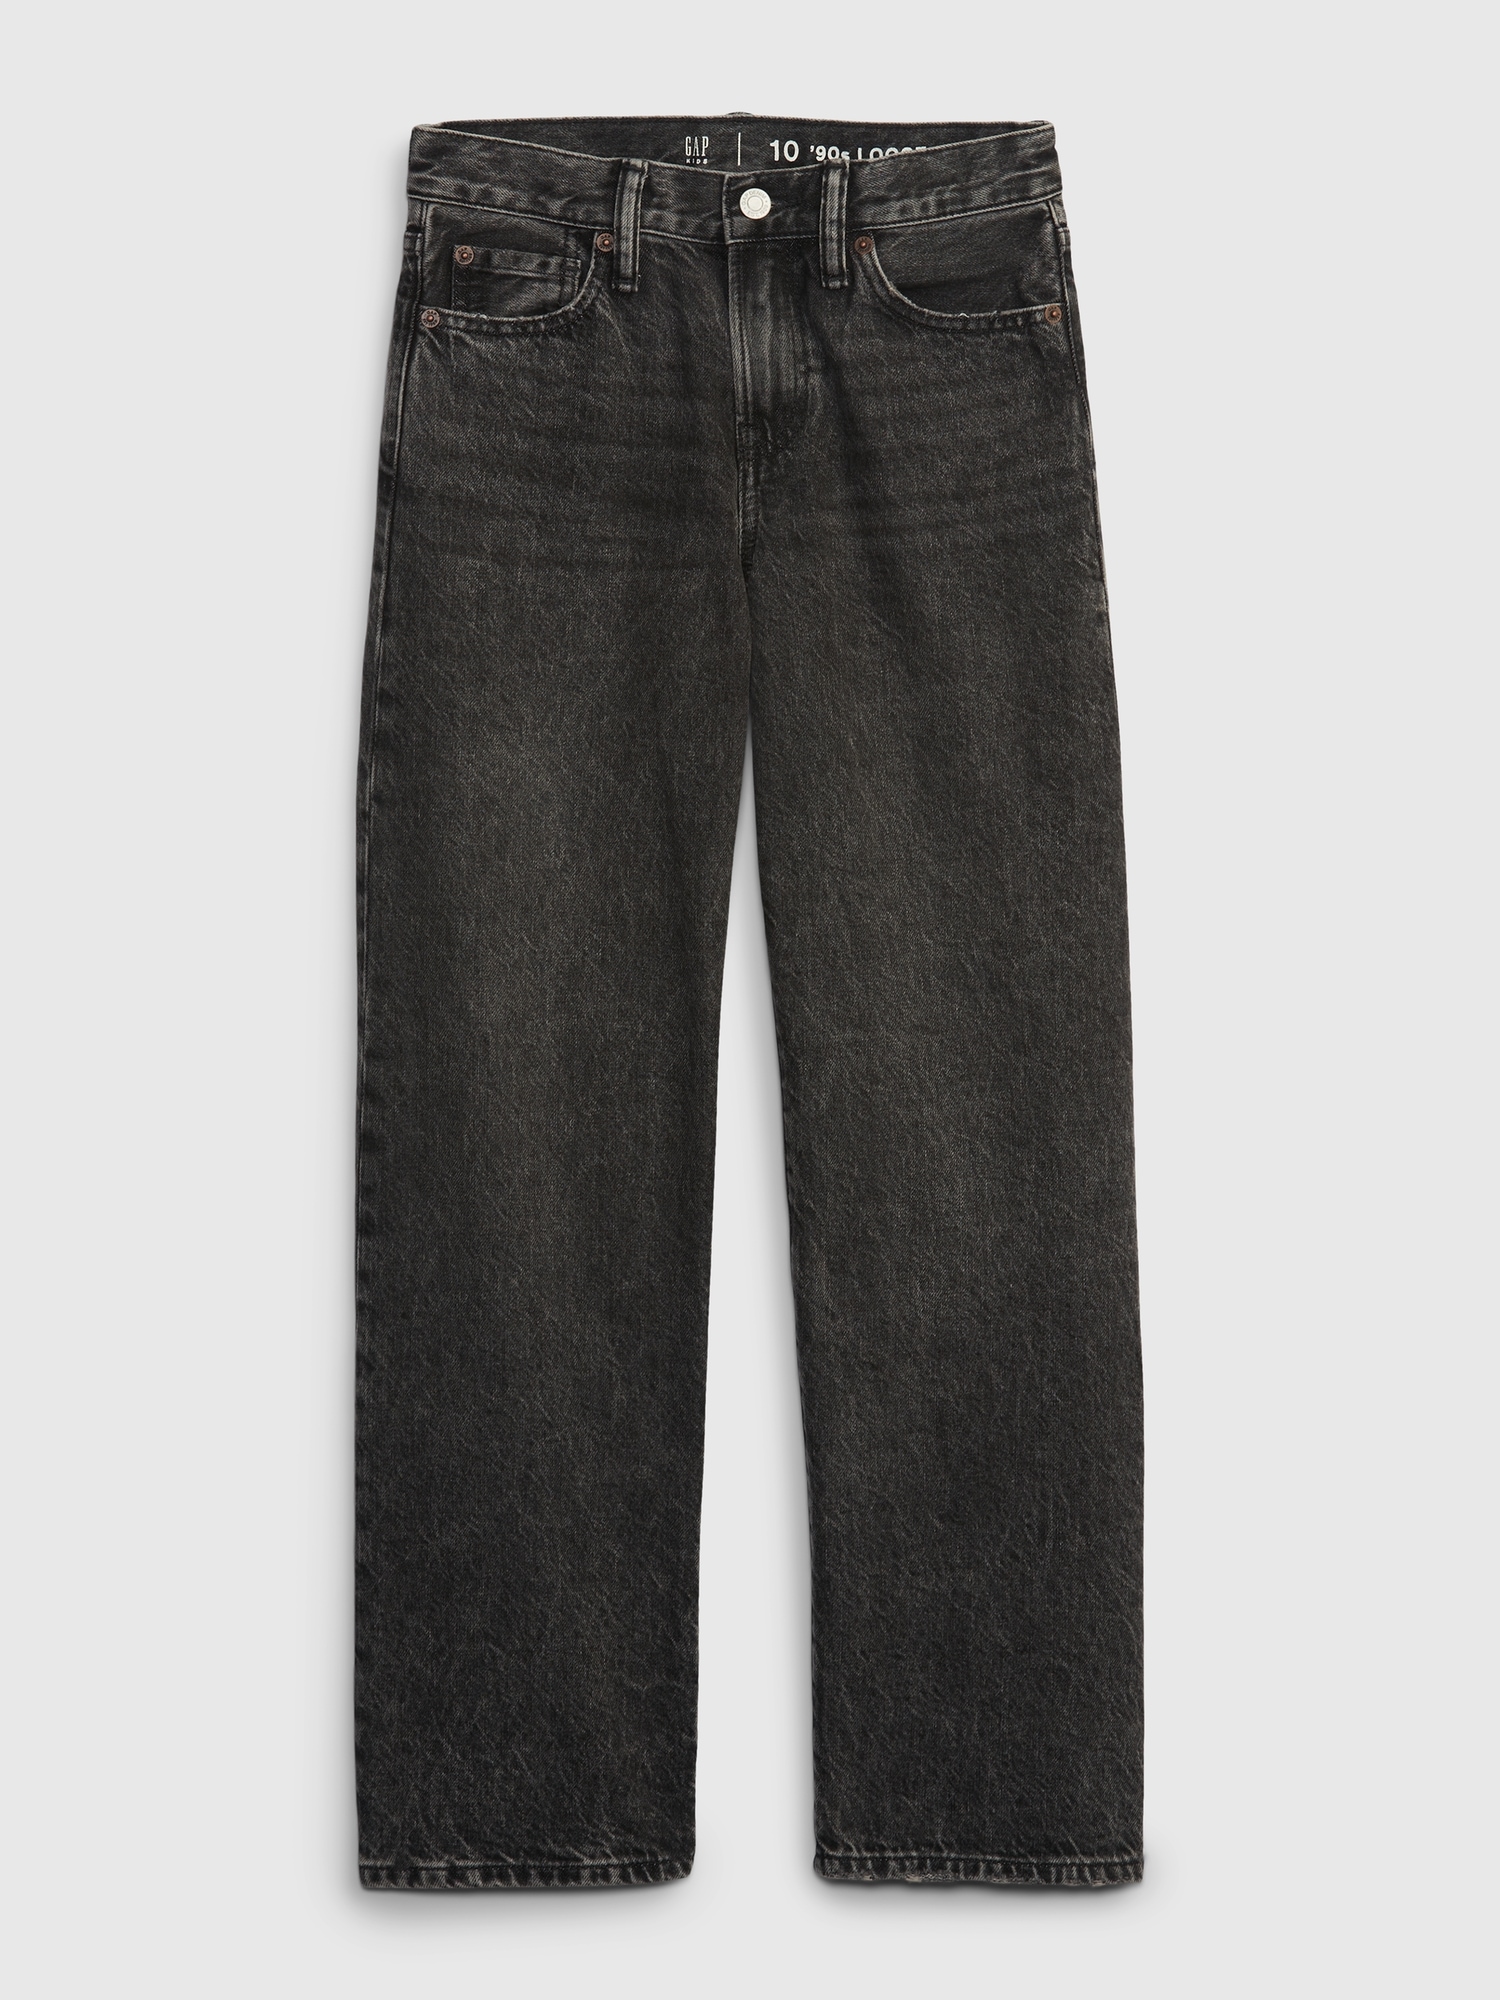 Loose Cotton | \'90s Kids Jeans Gap Organic